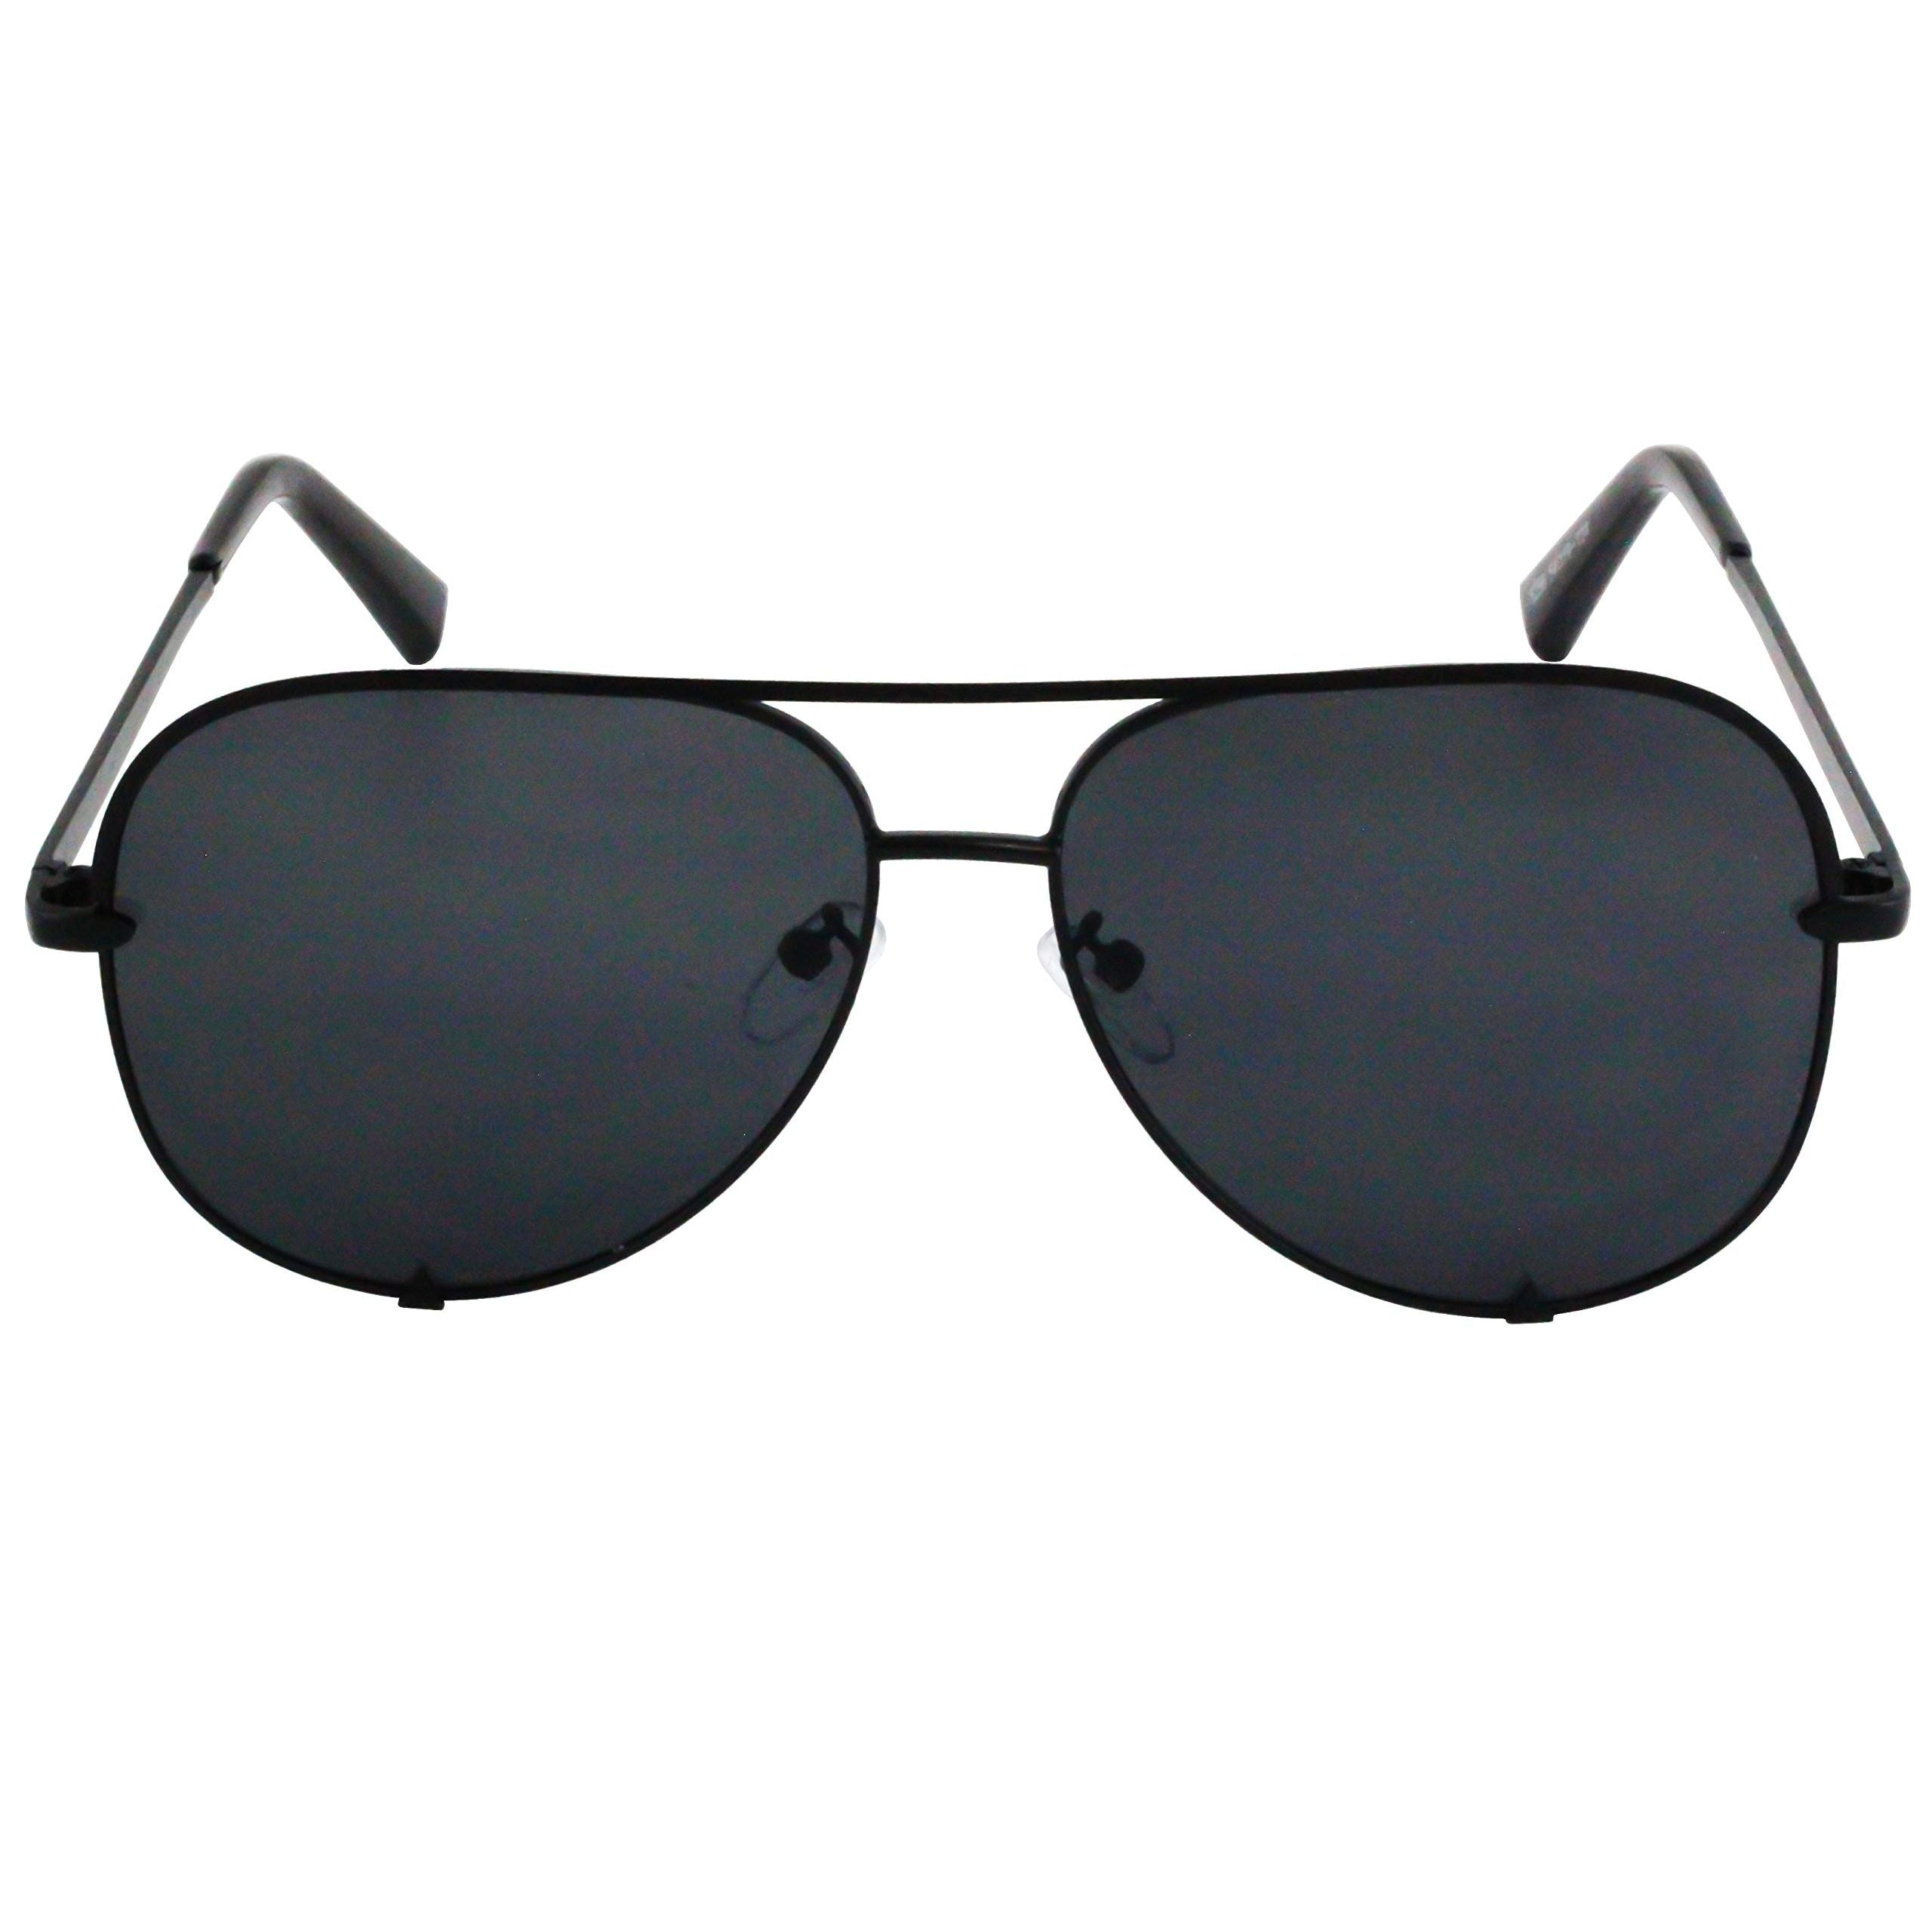 Shop Longway Black/Mirror Sunglasses for Men